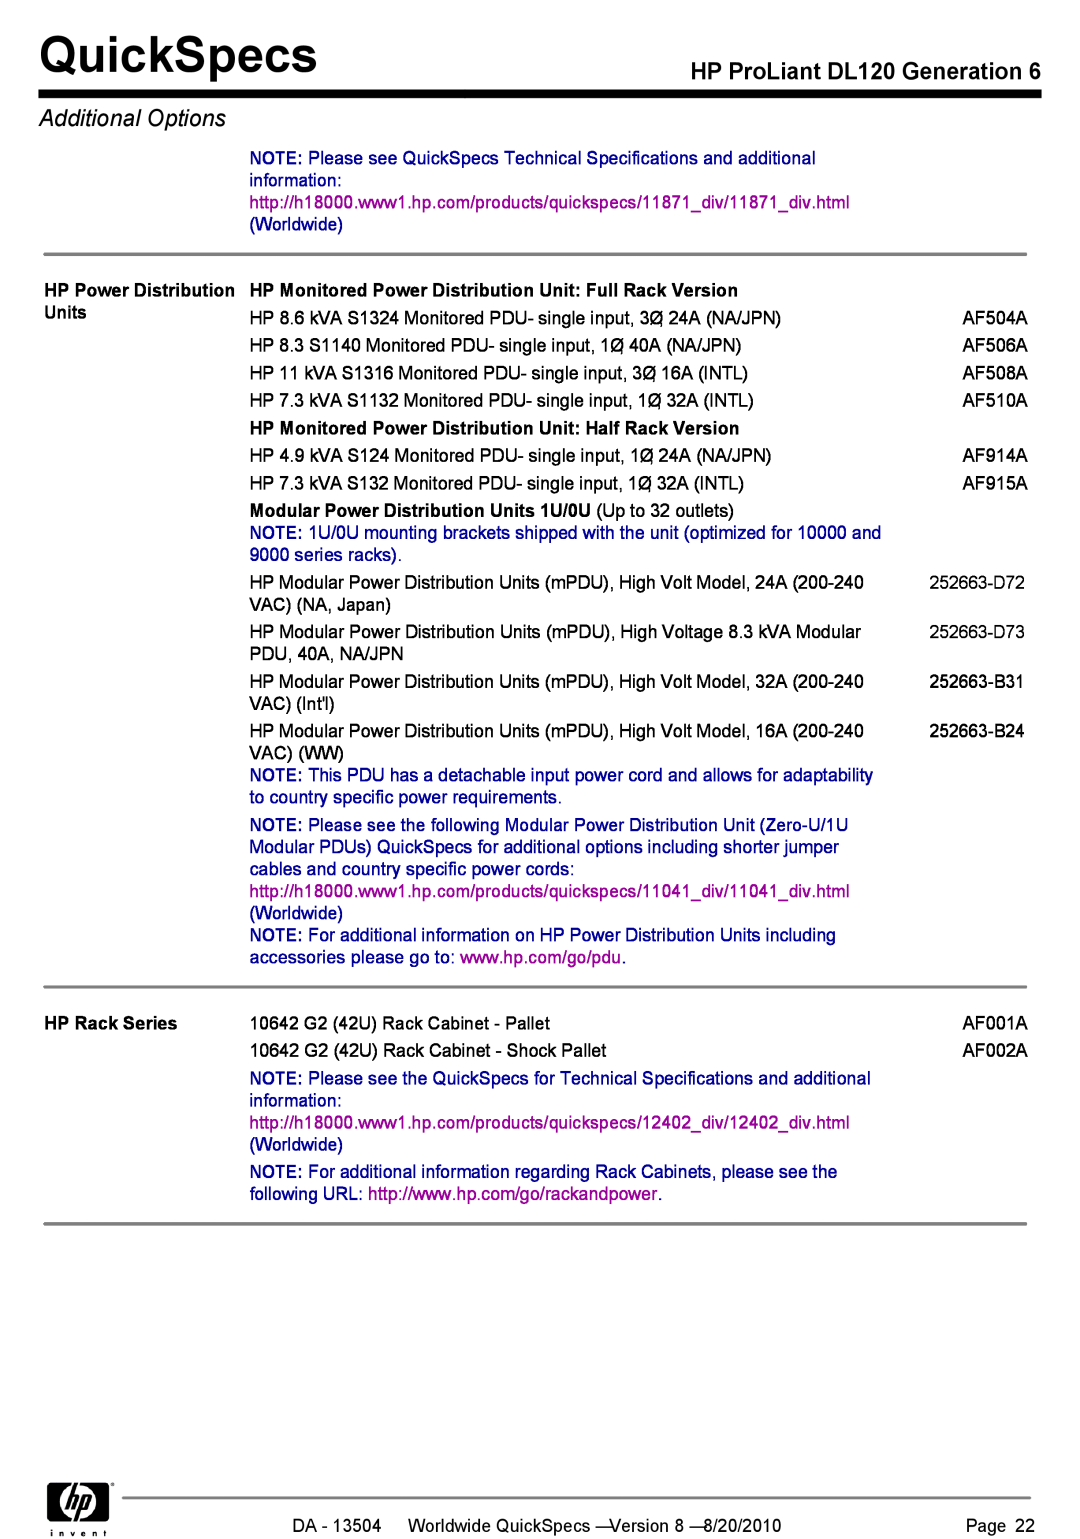 HP manual QuickSpecs, HP ProLiant DL120 Generation, Additional Options 